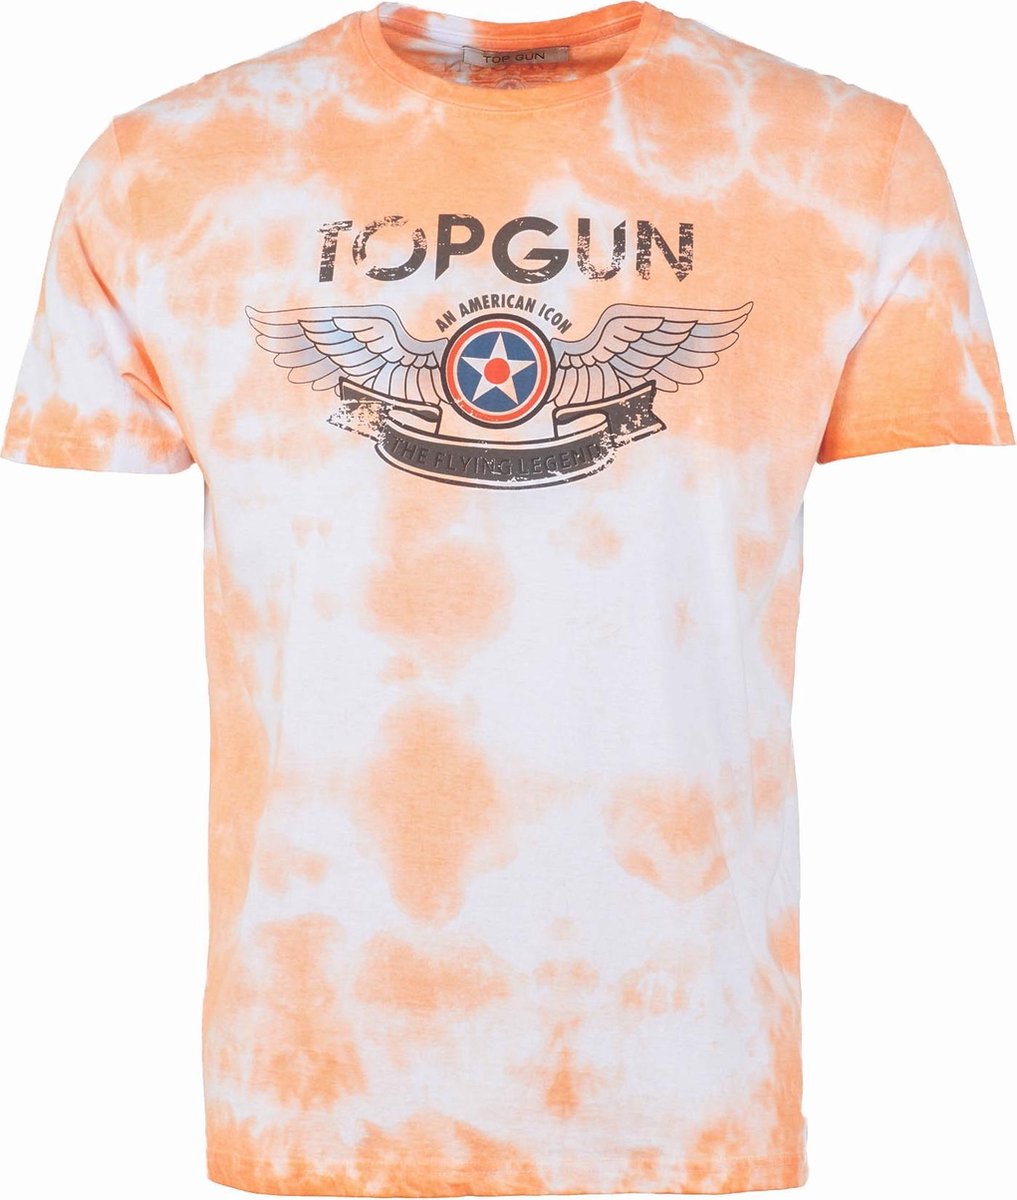 Top Gun ® T-Shirt American Icon camouflage (M)